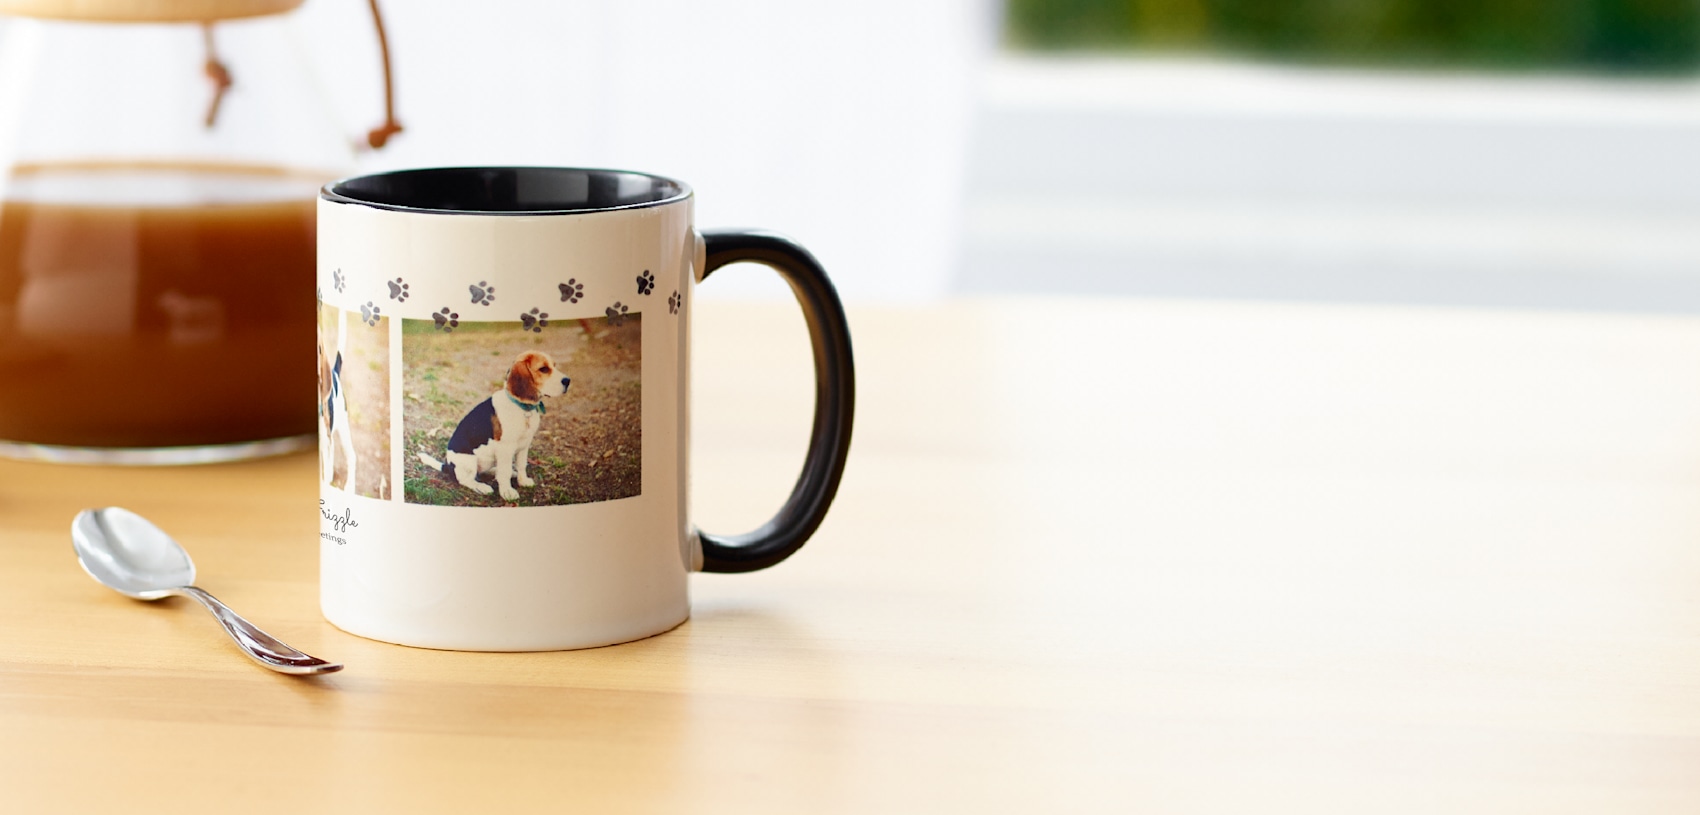 Larger version: custom mug with dog